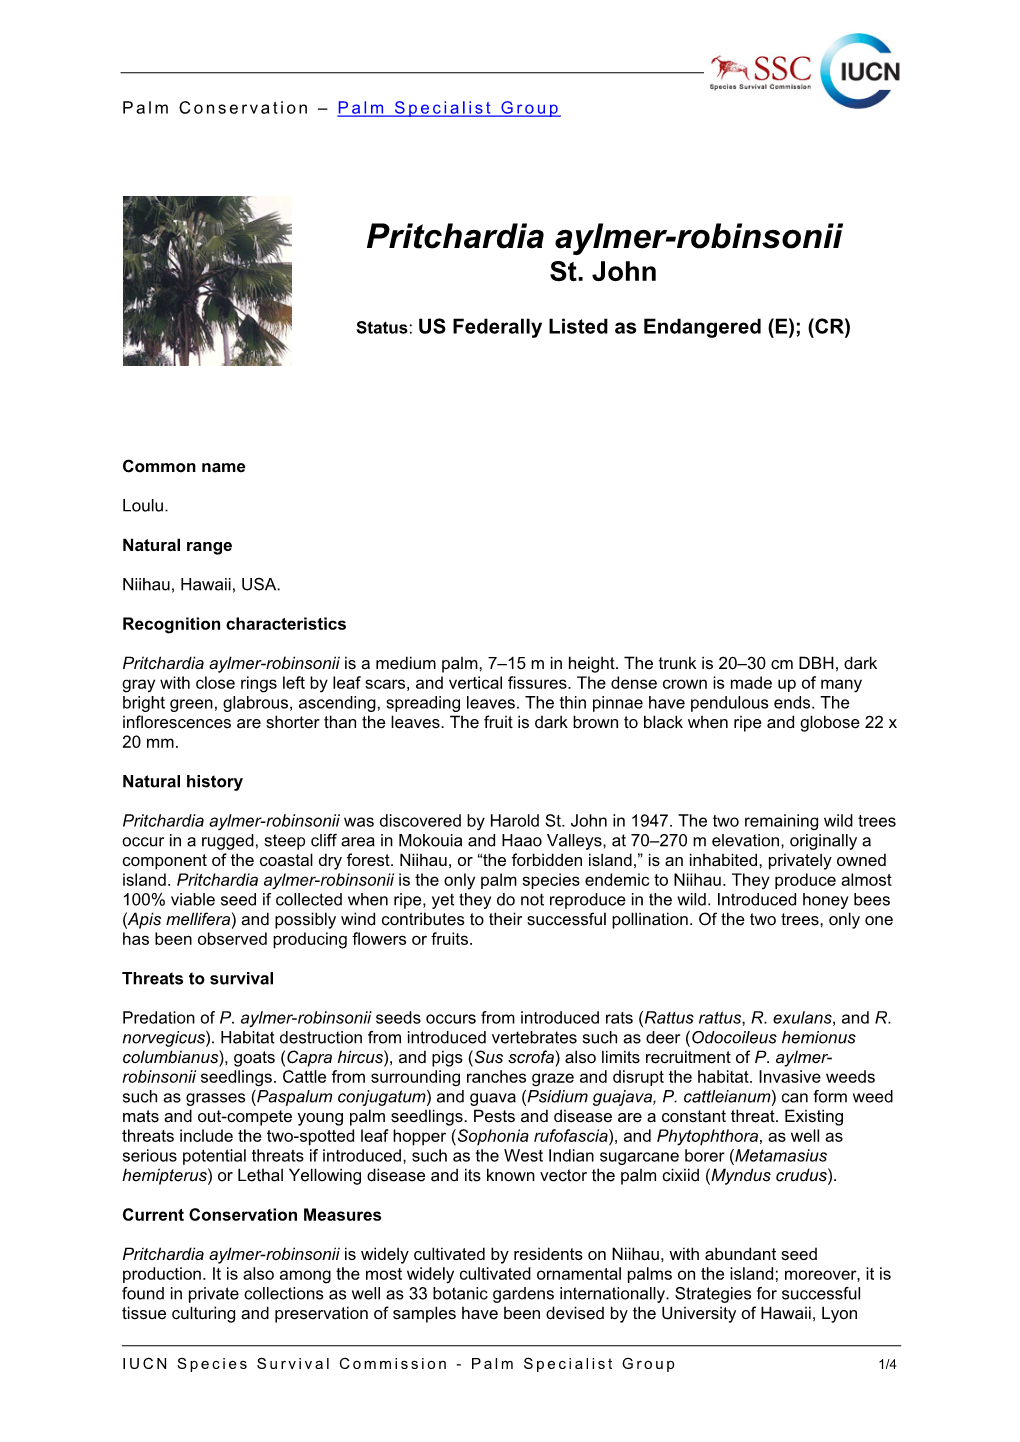 Pritchardia Aylmer-Robinsoni Conservation Fact Sheet